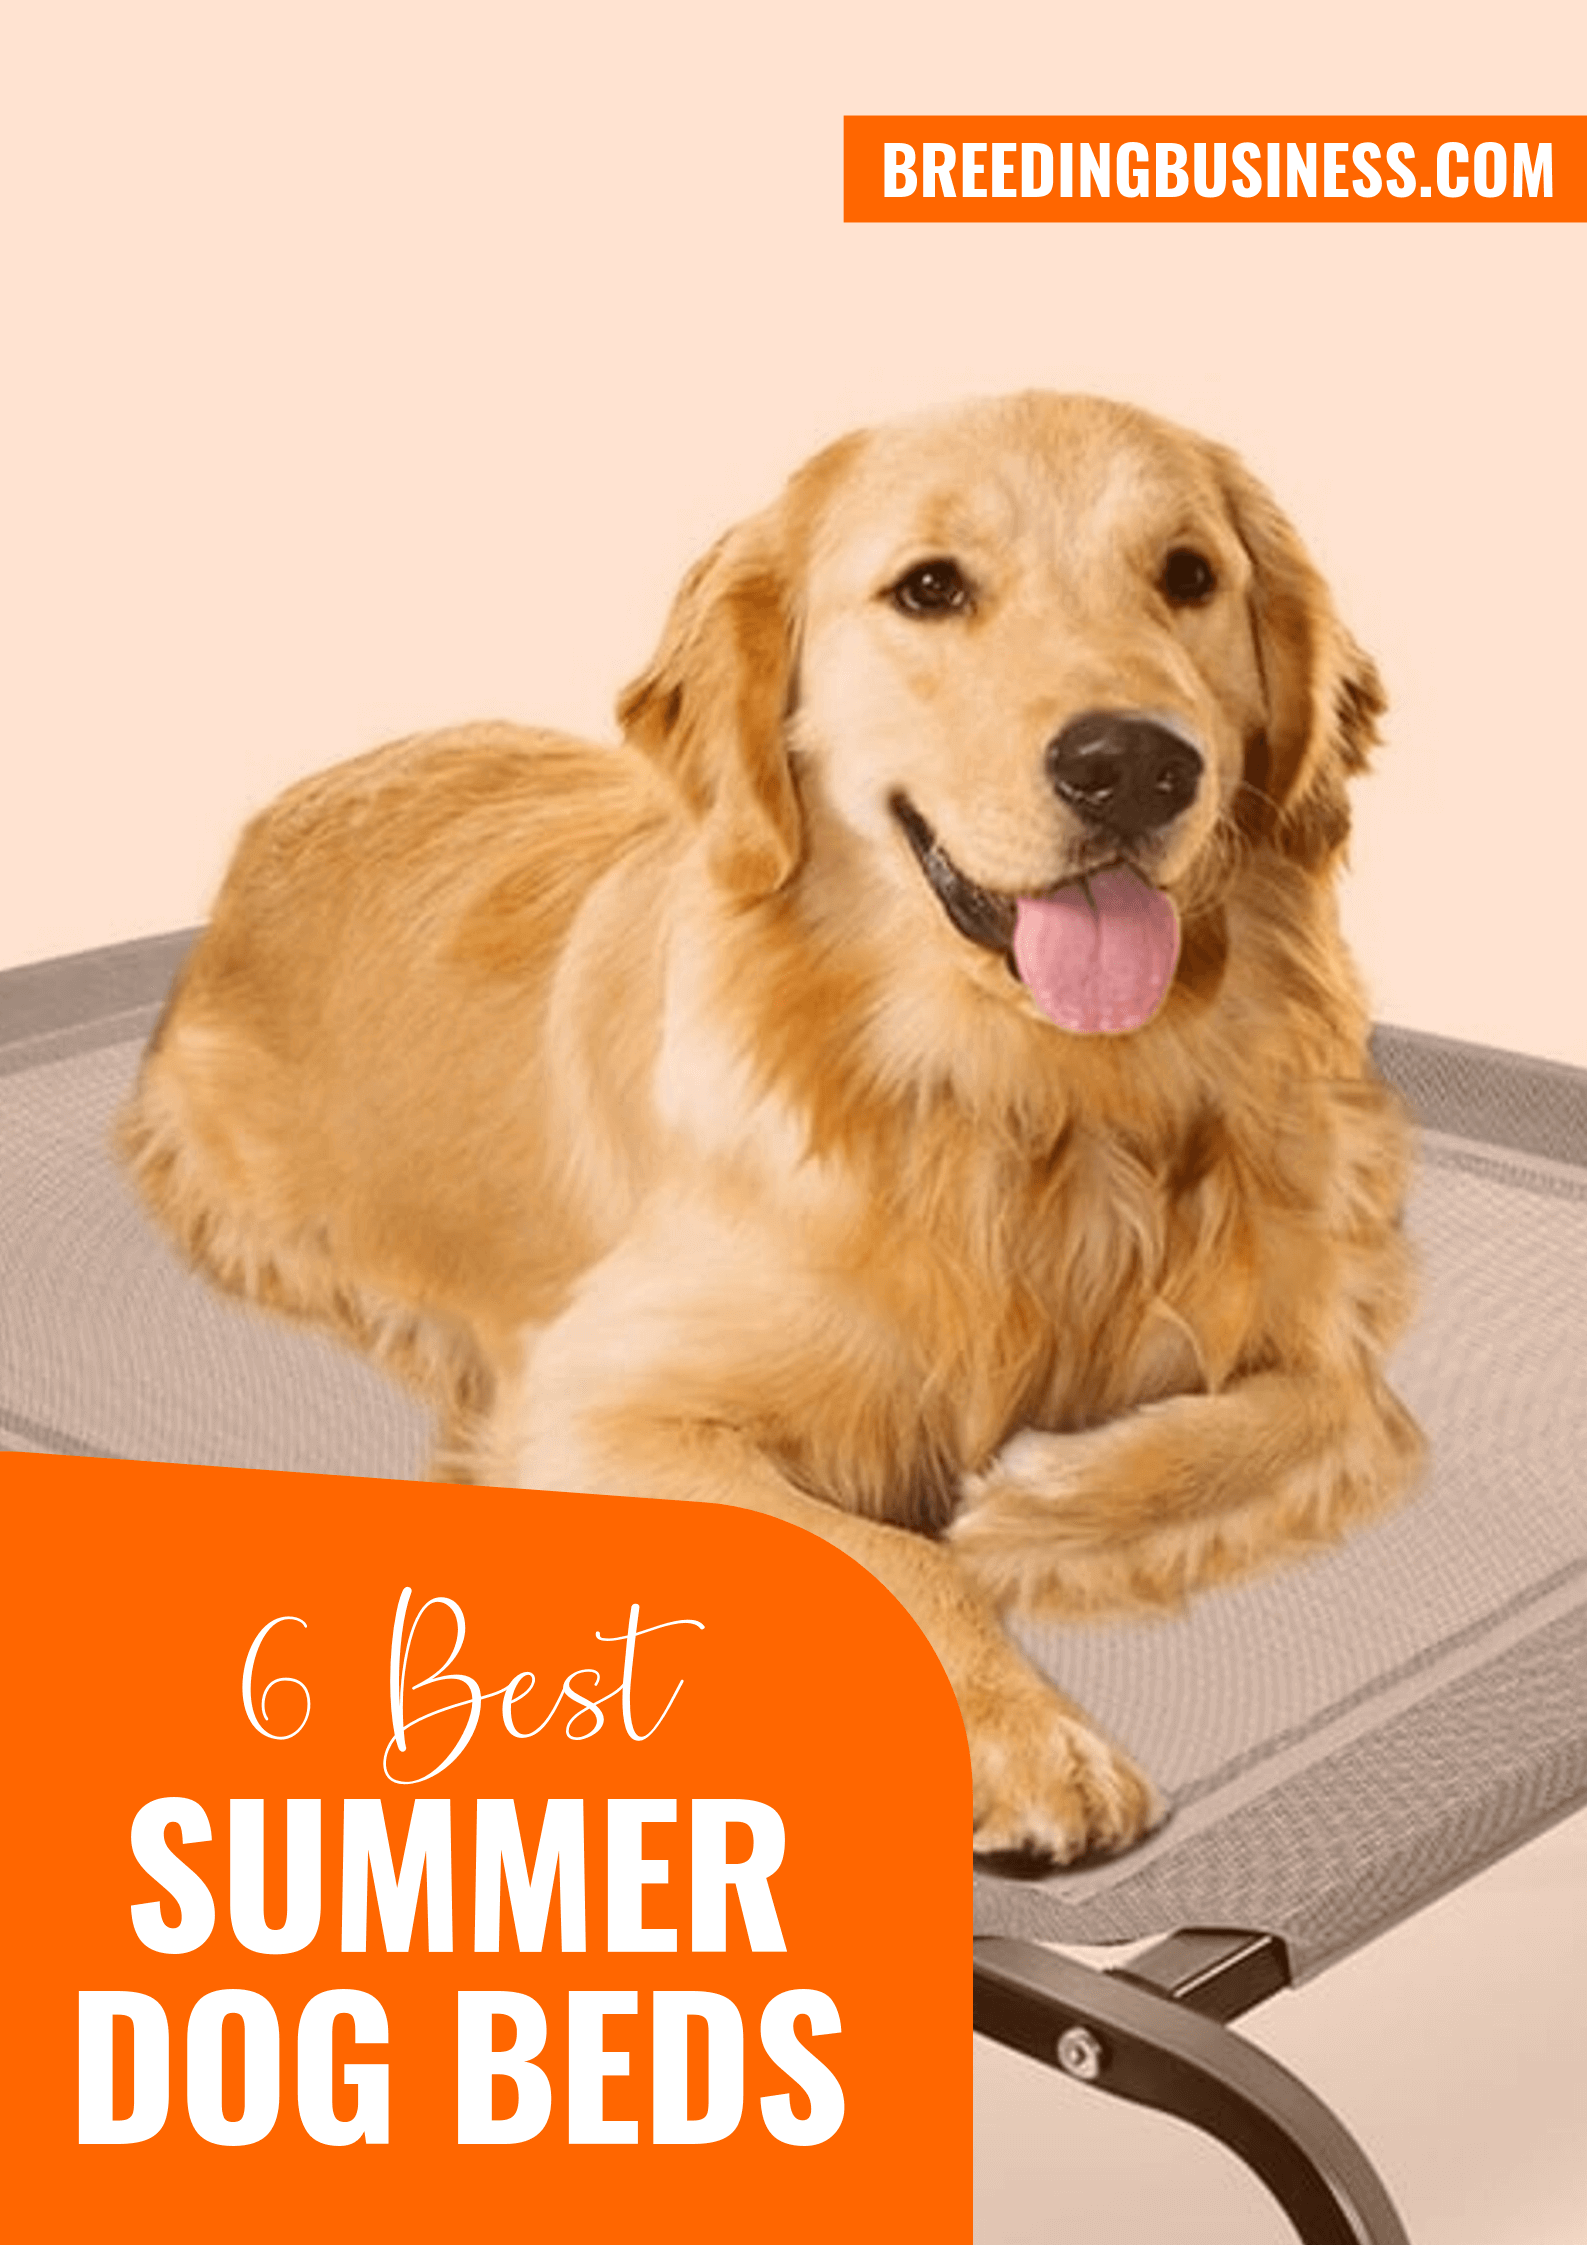 6 Best Summer Dog Beds – Cooling, Breathable & Elevated